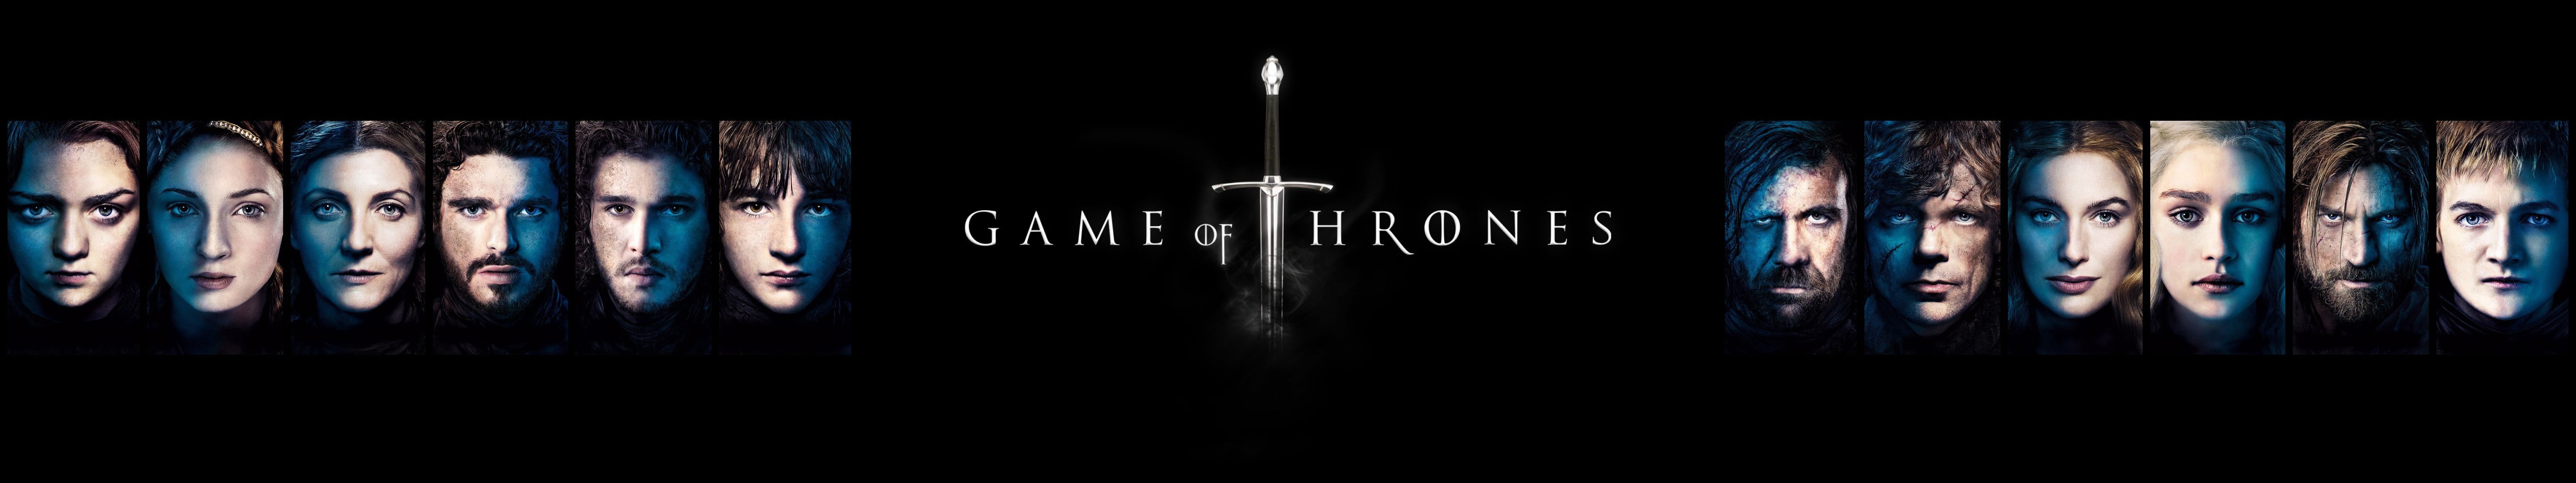 Game of Thrones art, triple screen, collage, illuminated, lighting Equipment